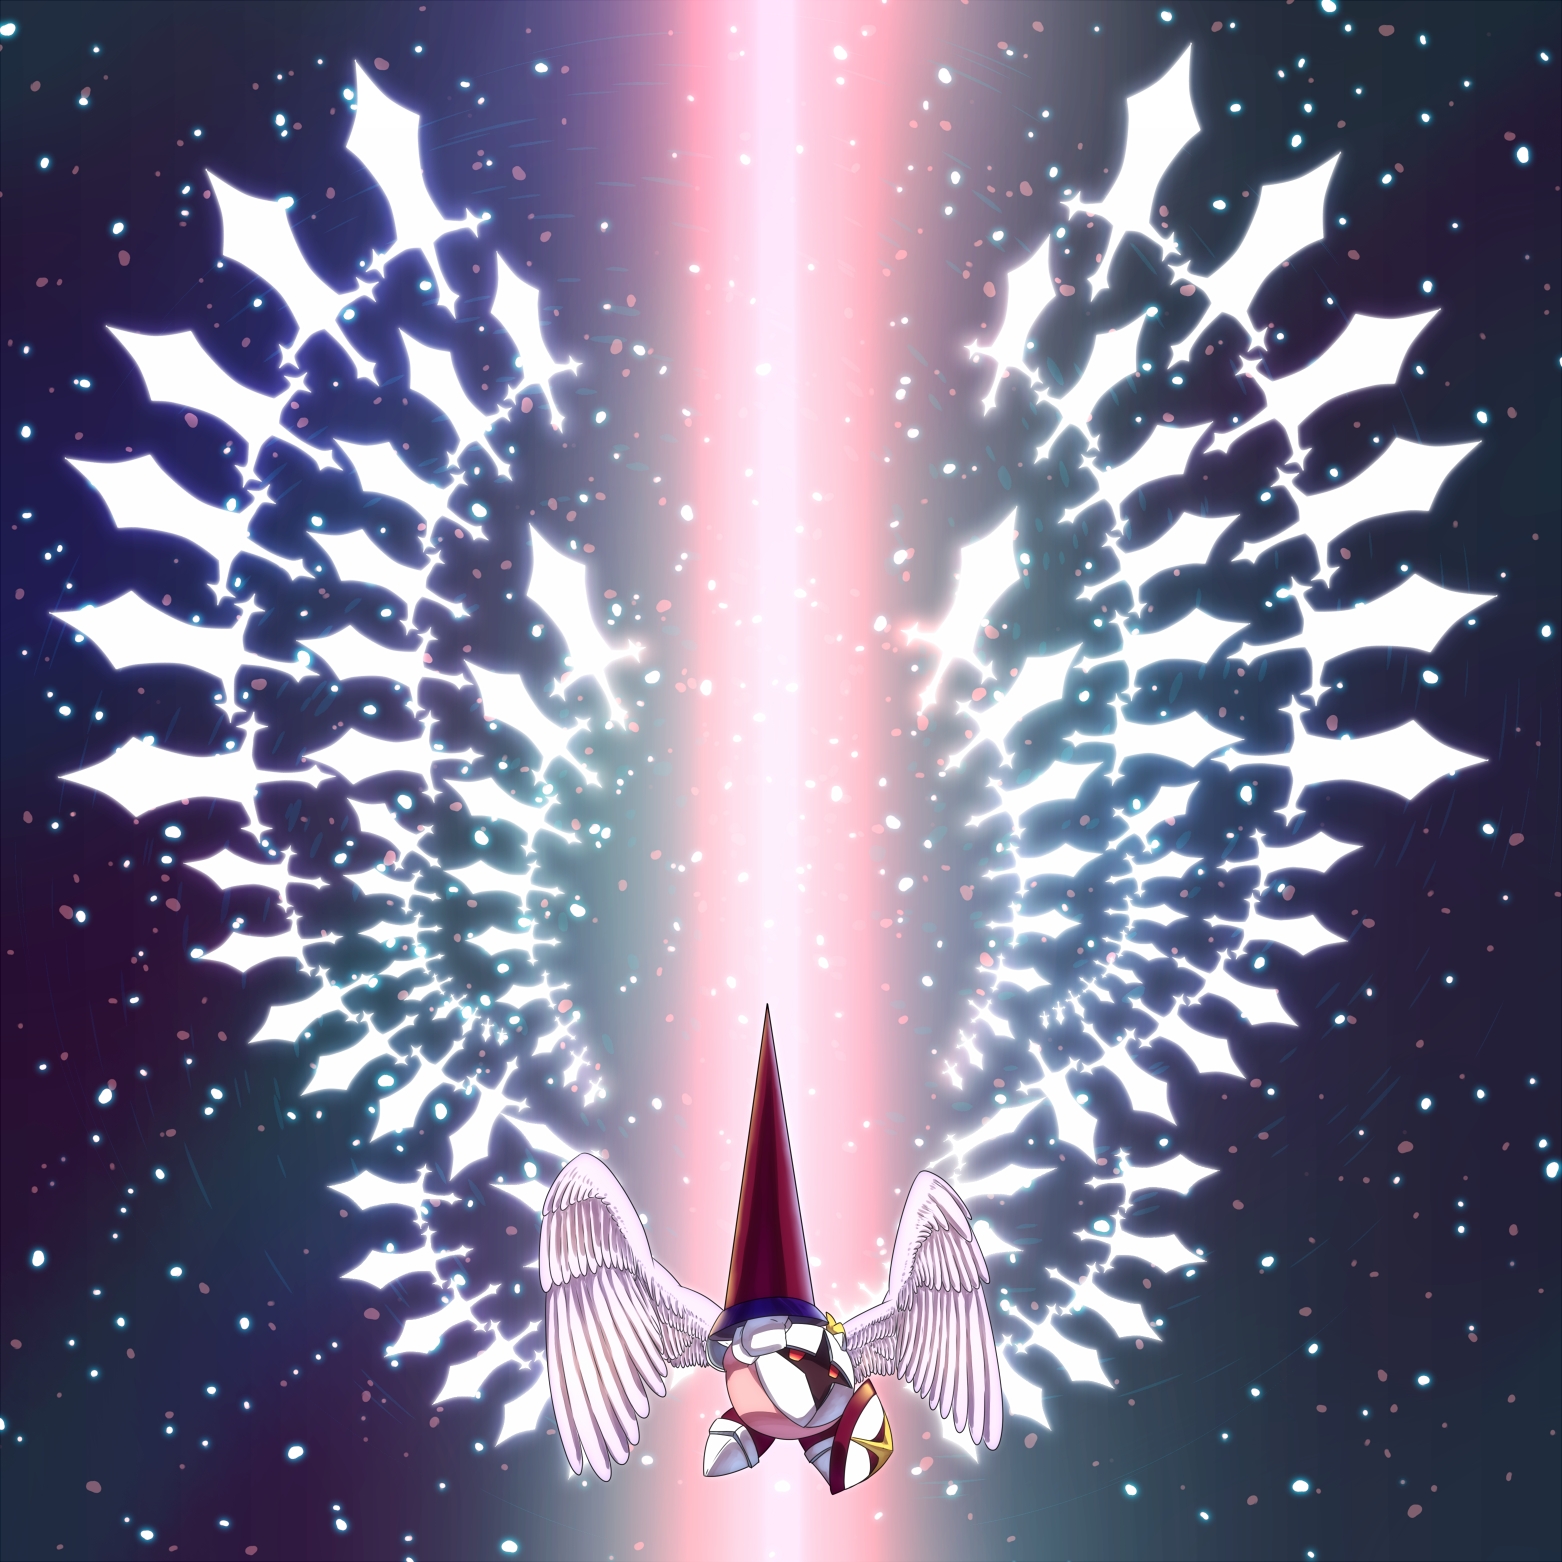 Galacta Knight Series Anime Image Board